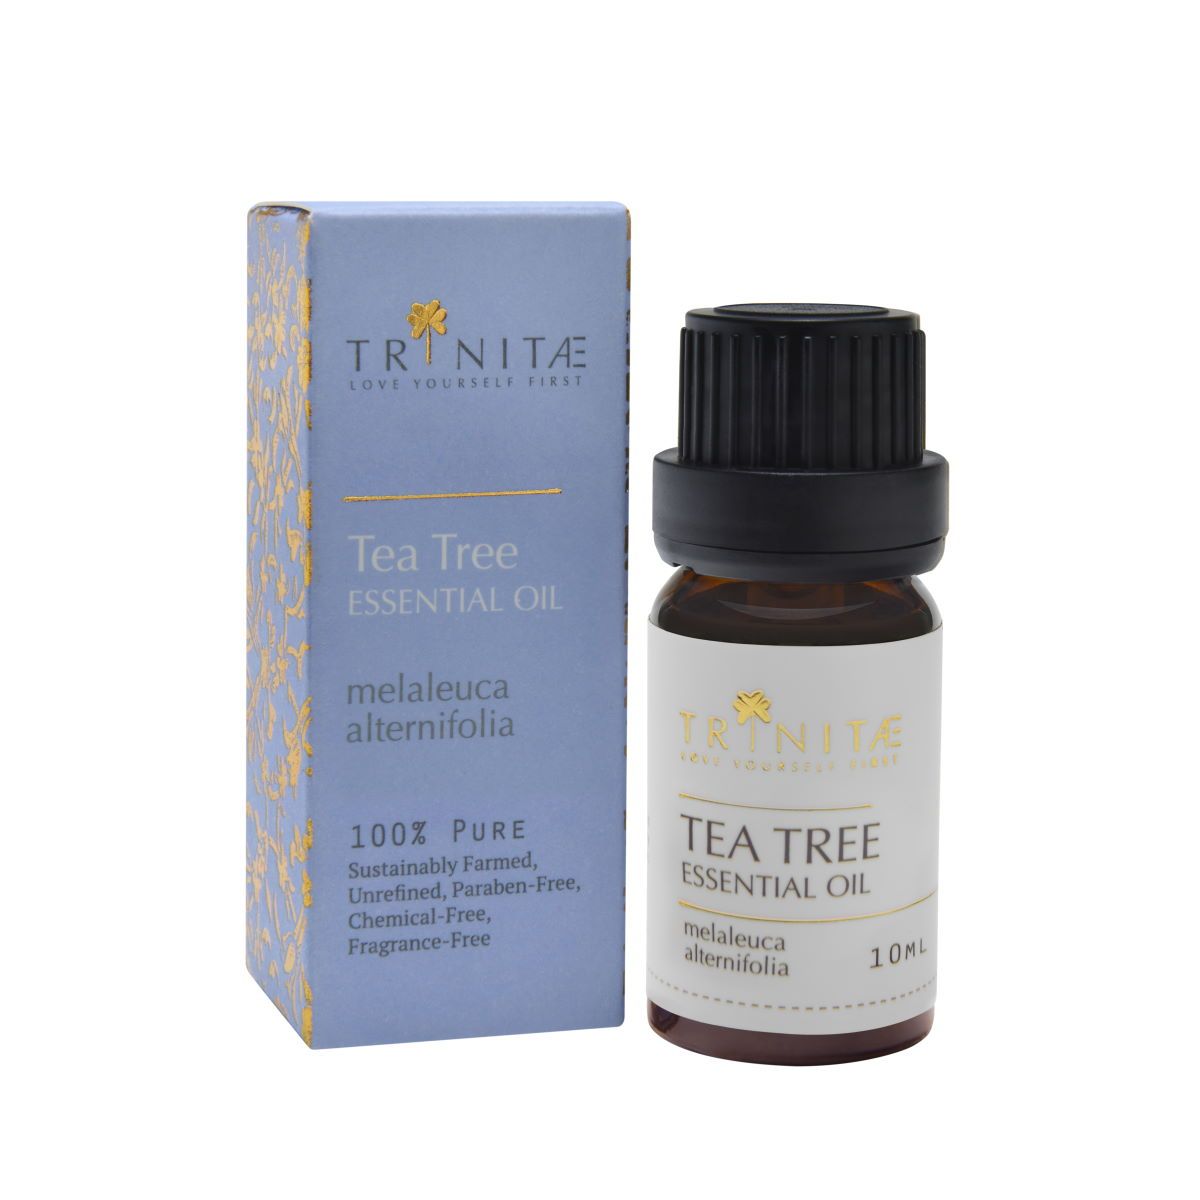 Tea Tree Essential Oil melaleuca alternifolia